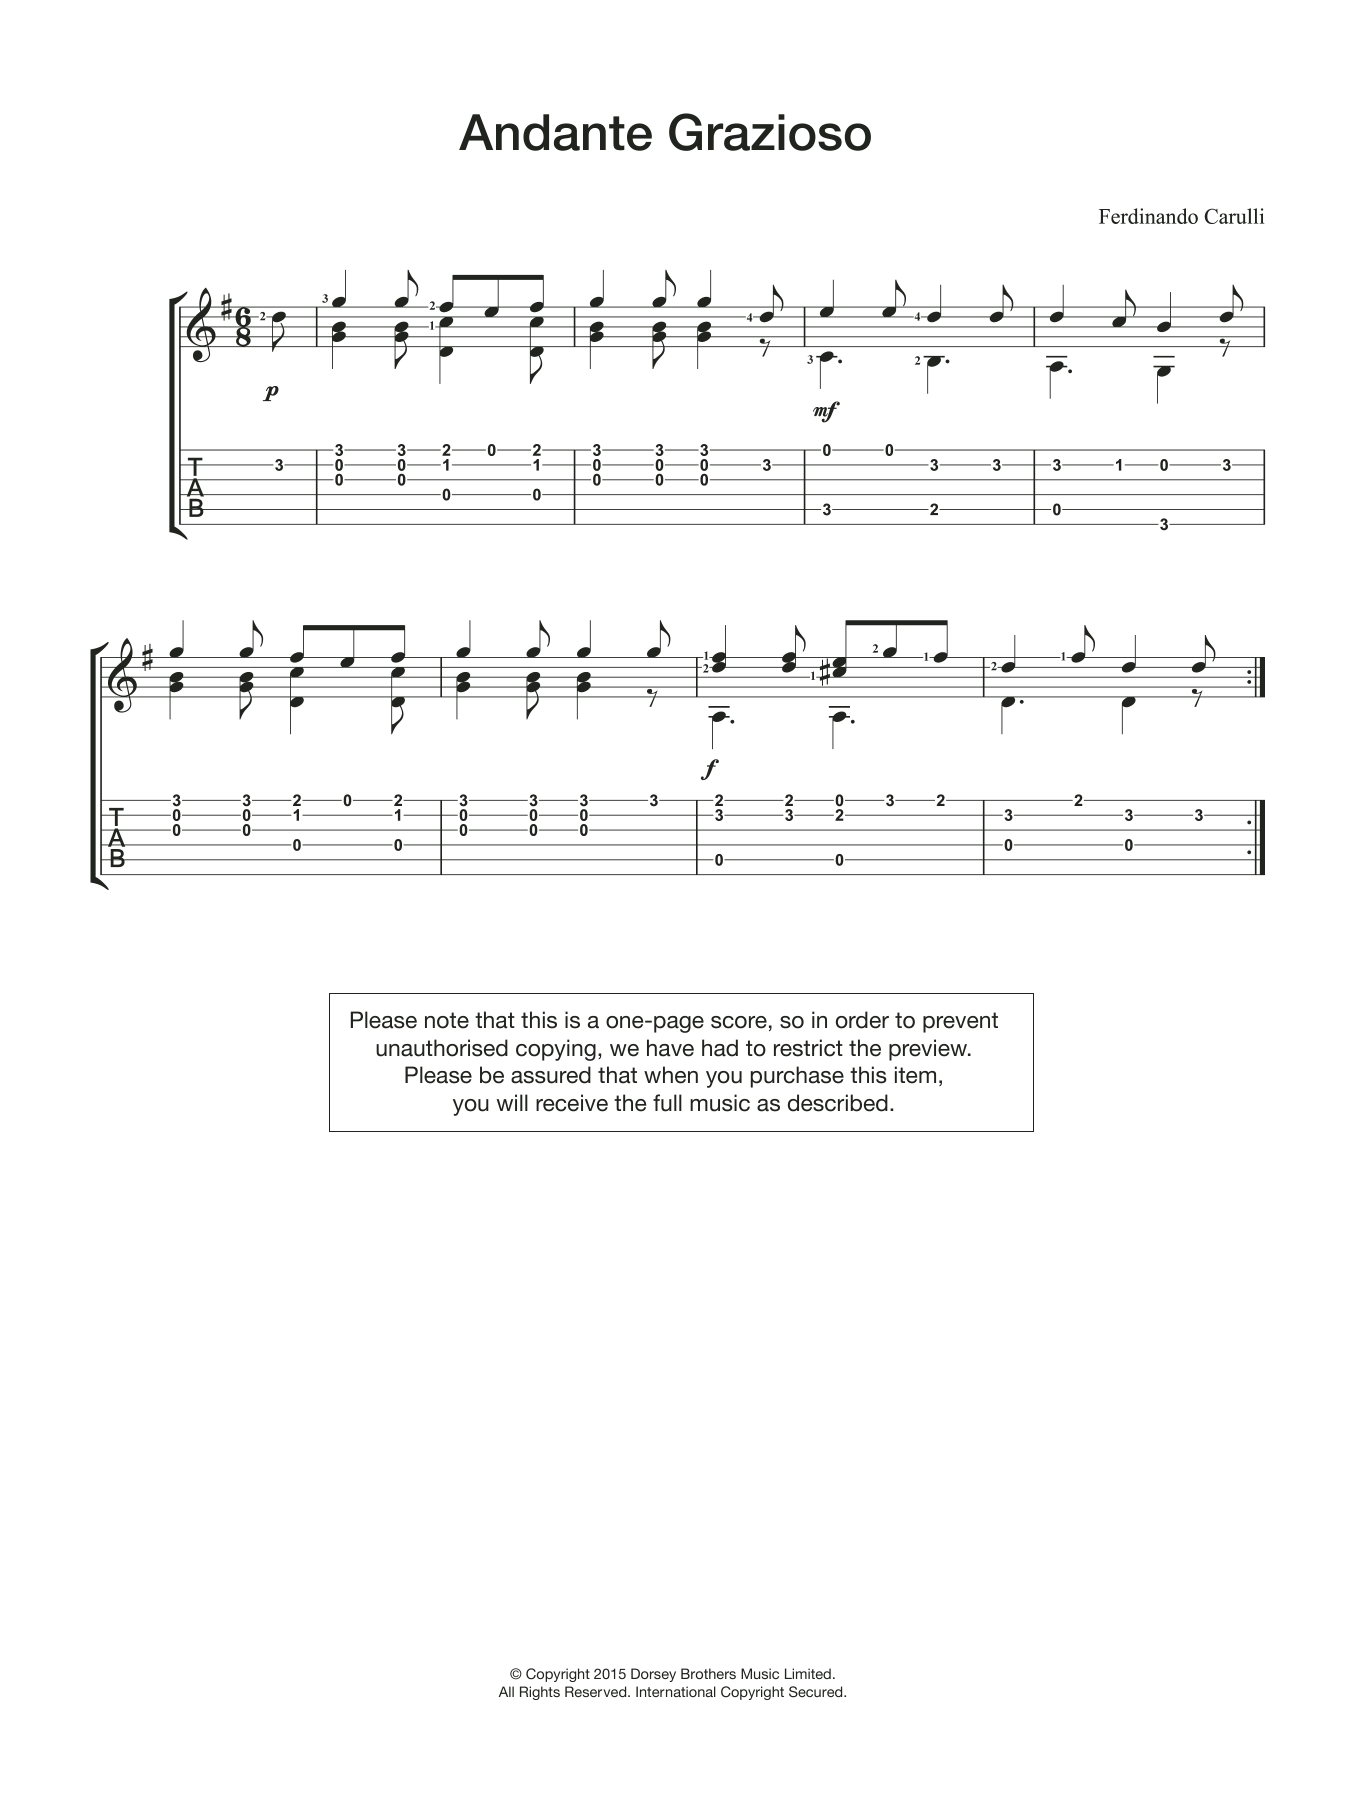 Download Ferdinando Carulli Andante Grazioso Sheet Music and learn how to play Guitar PDF digital score in minutes